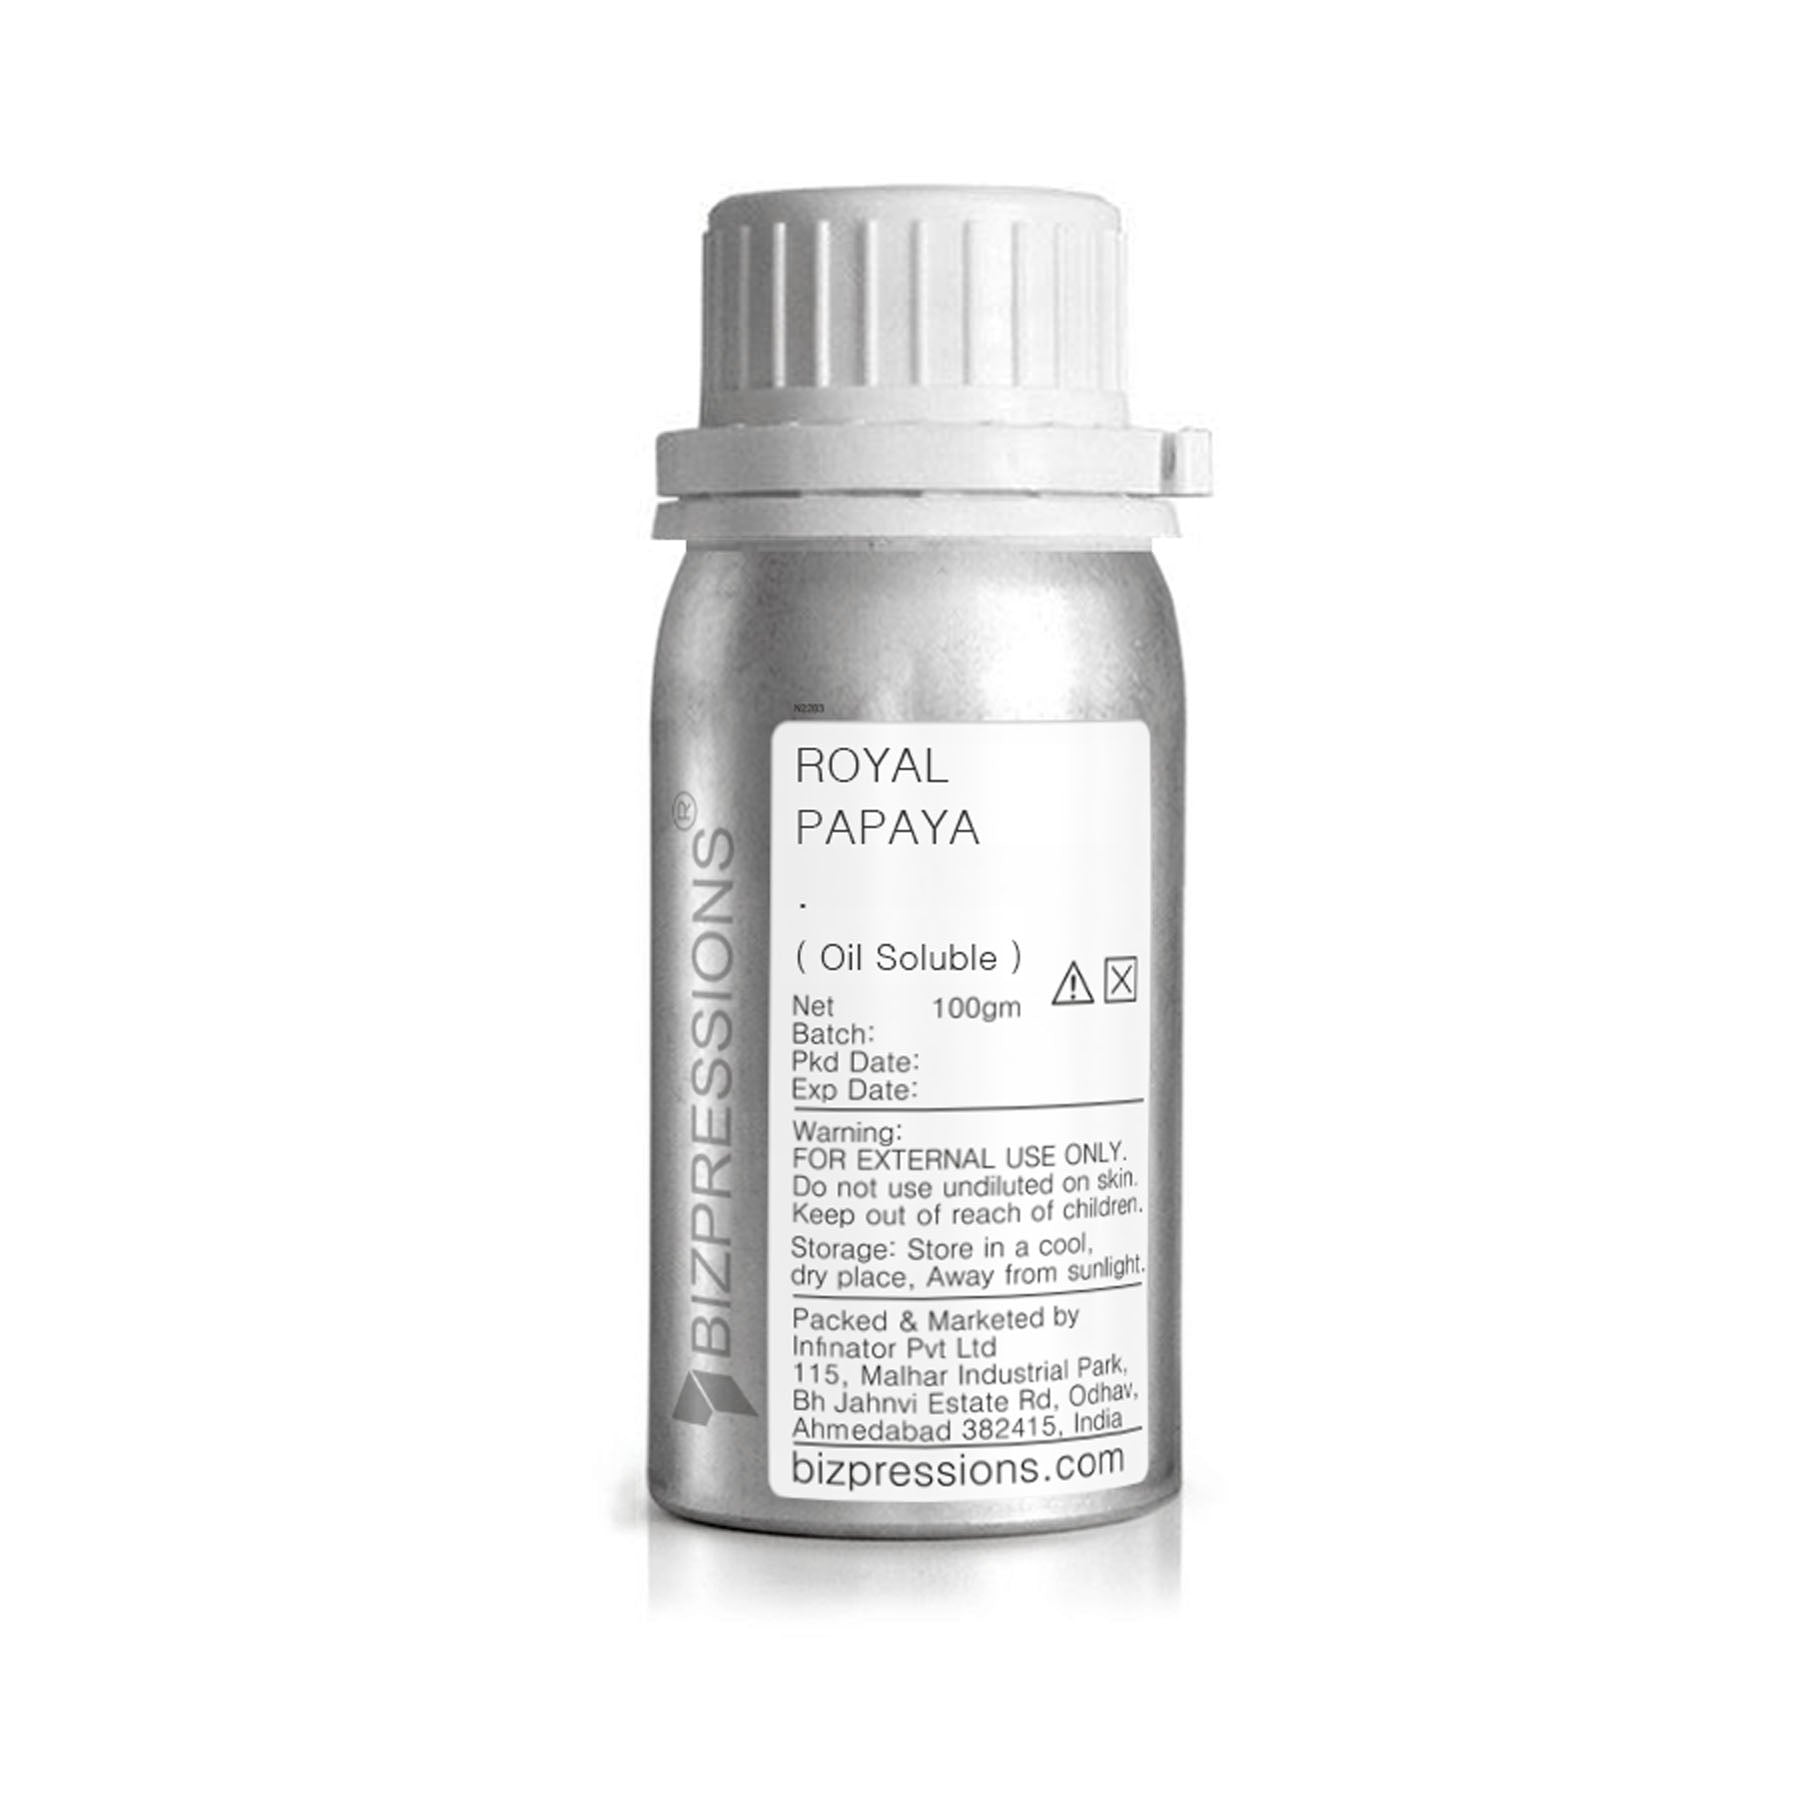 ROYAL PAPAYA - Fragrance ( Oil Soluble ) - 100 gm